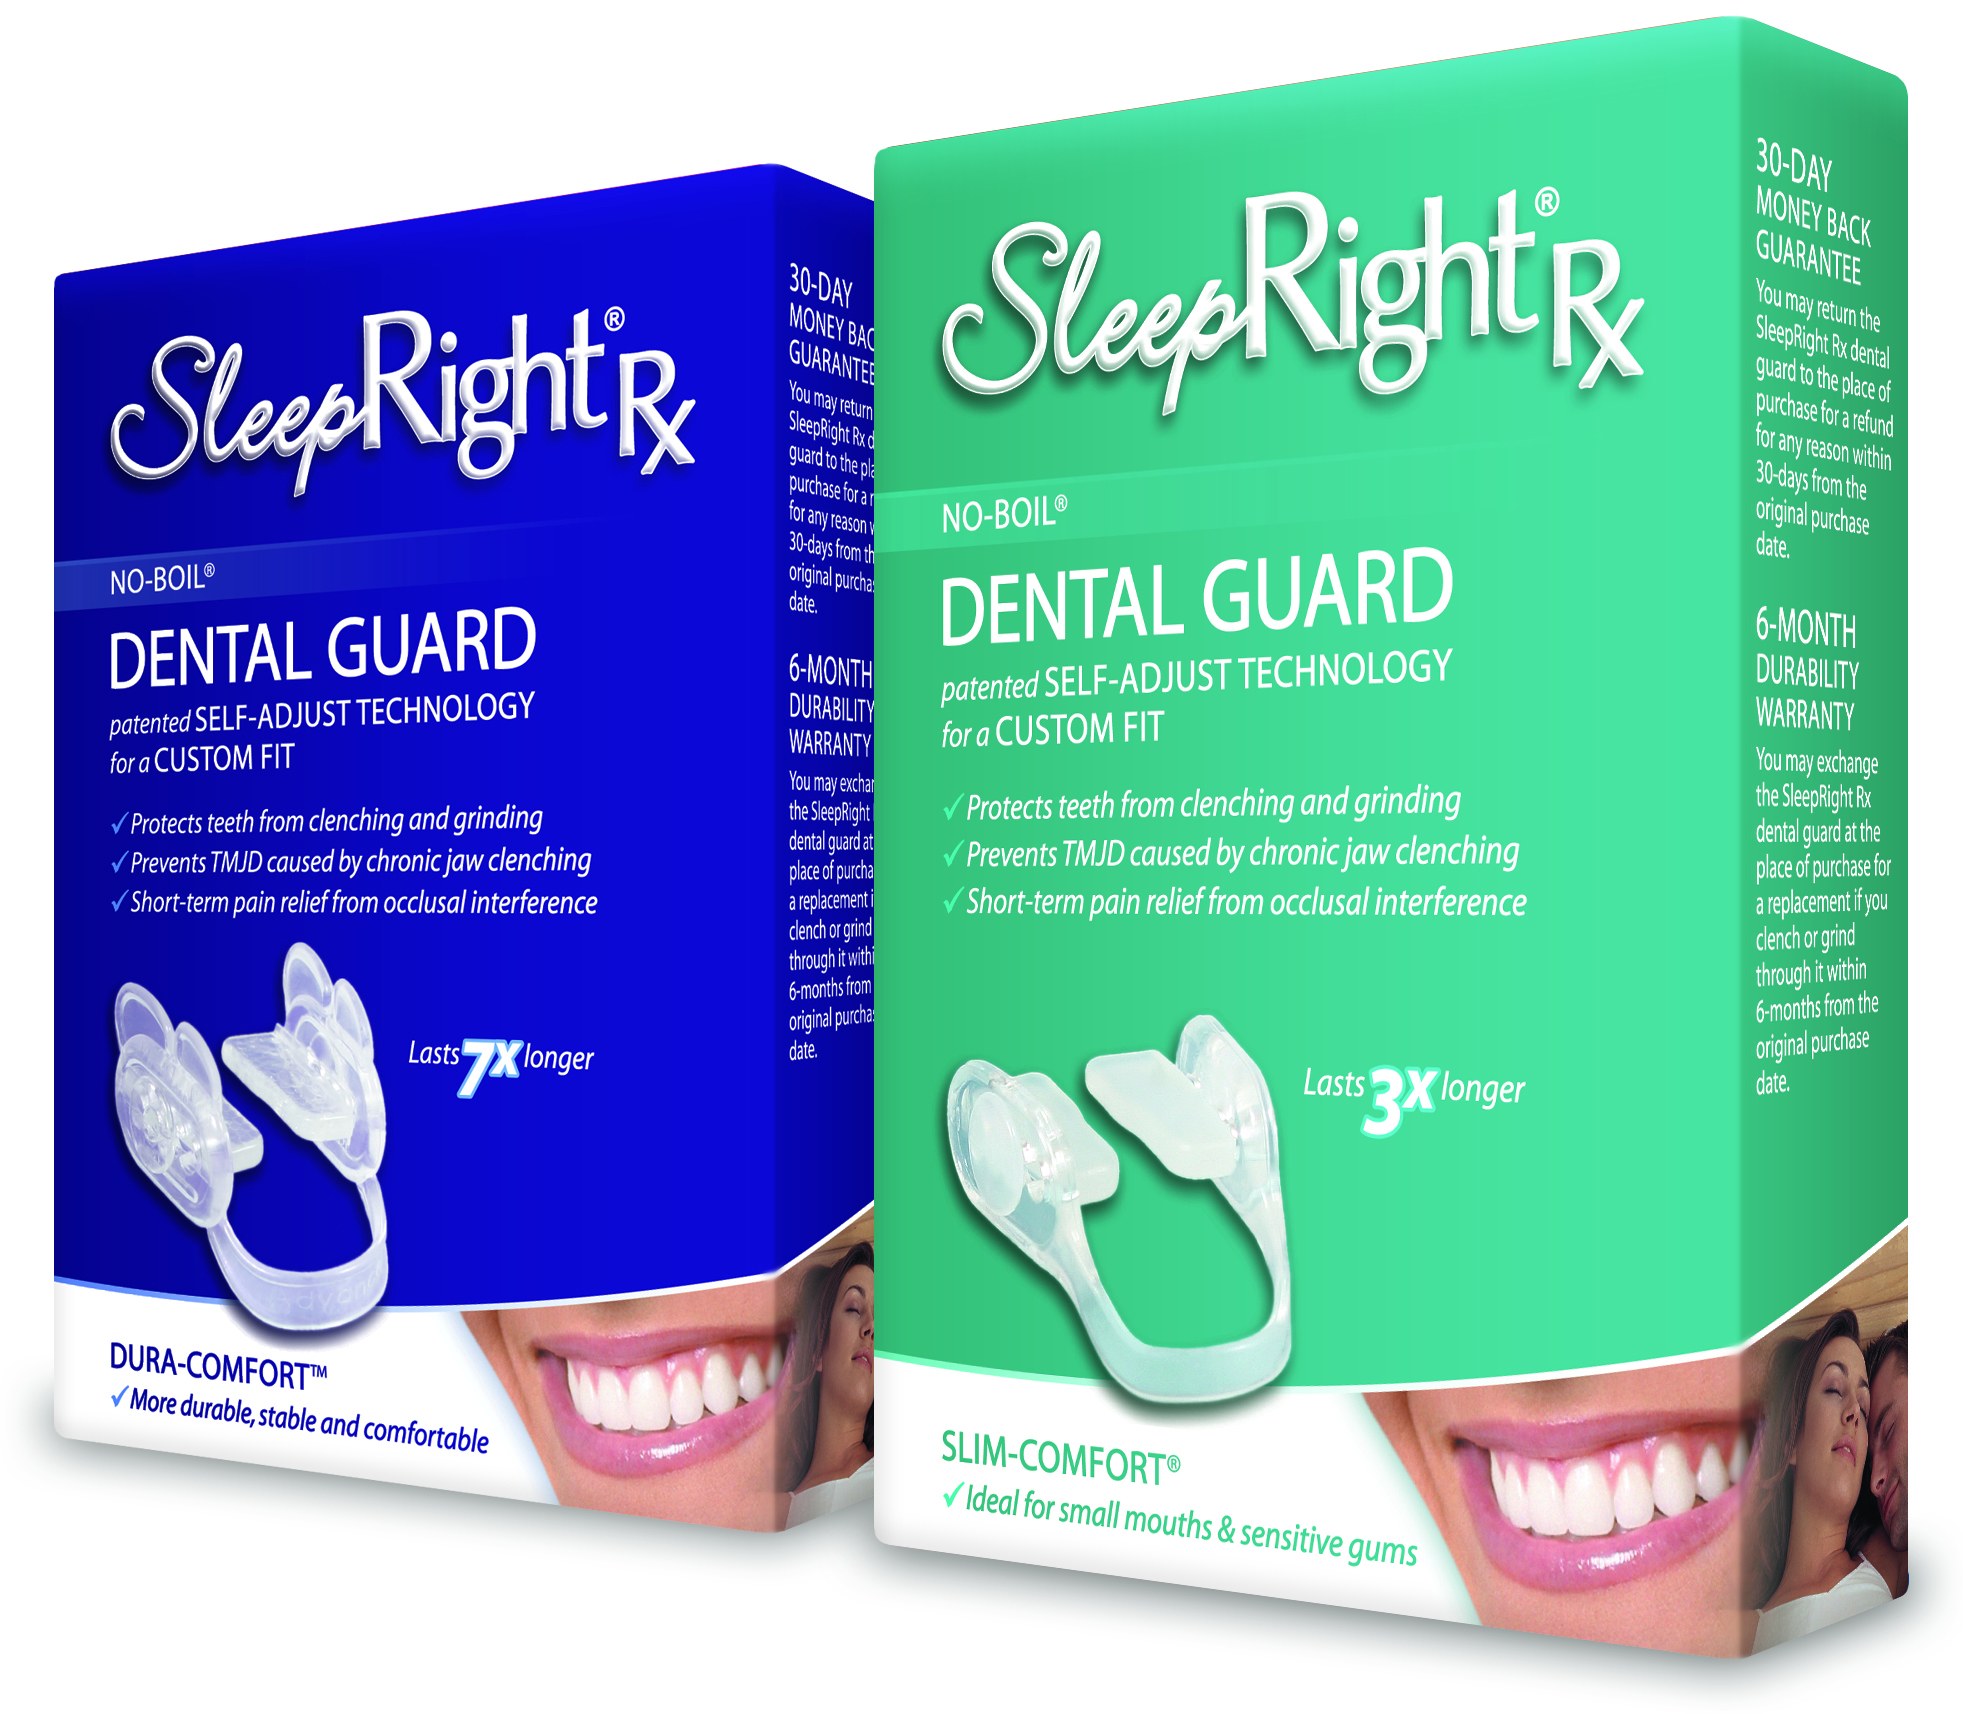 SleepRight Dental Guard